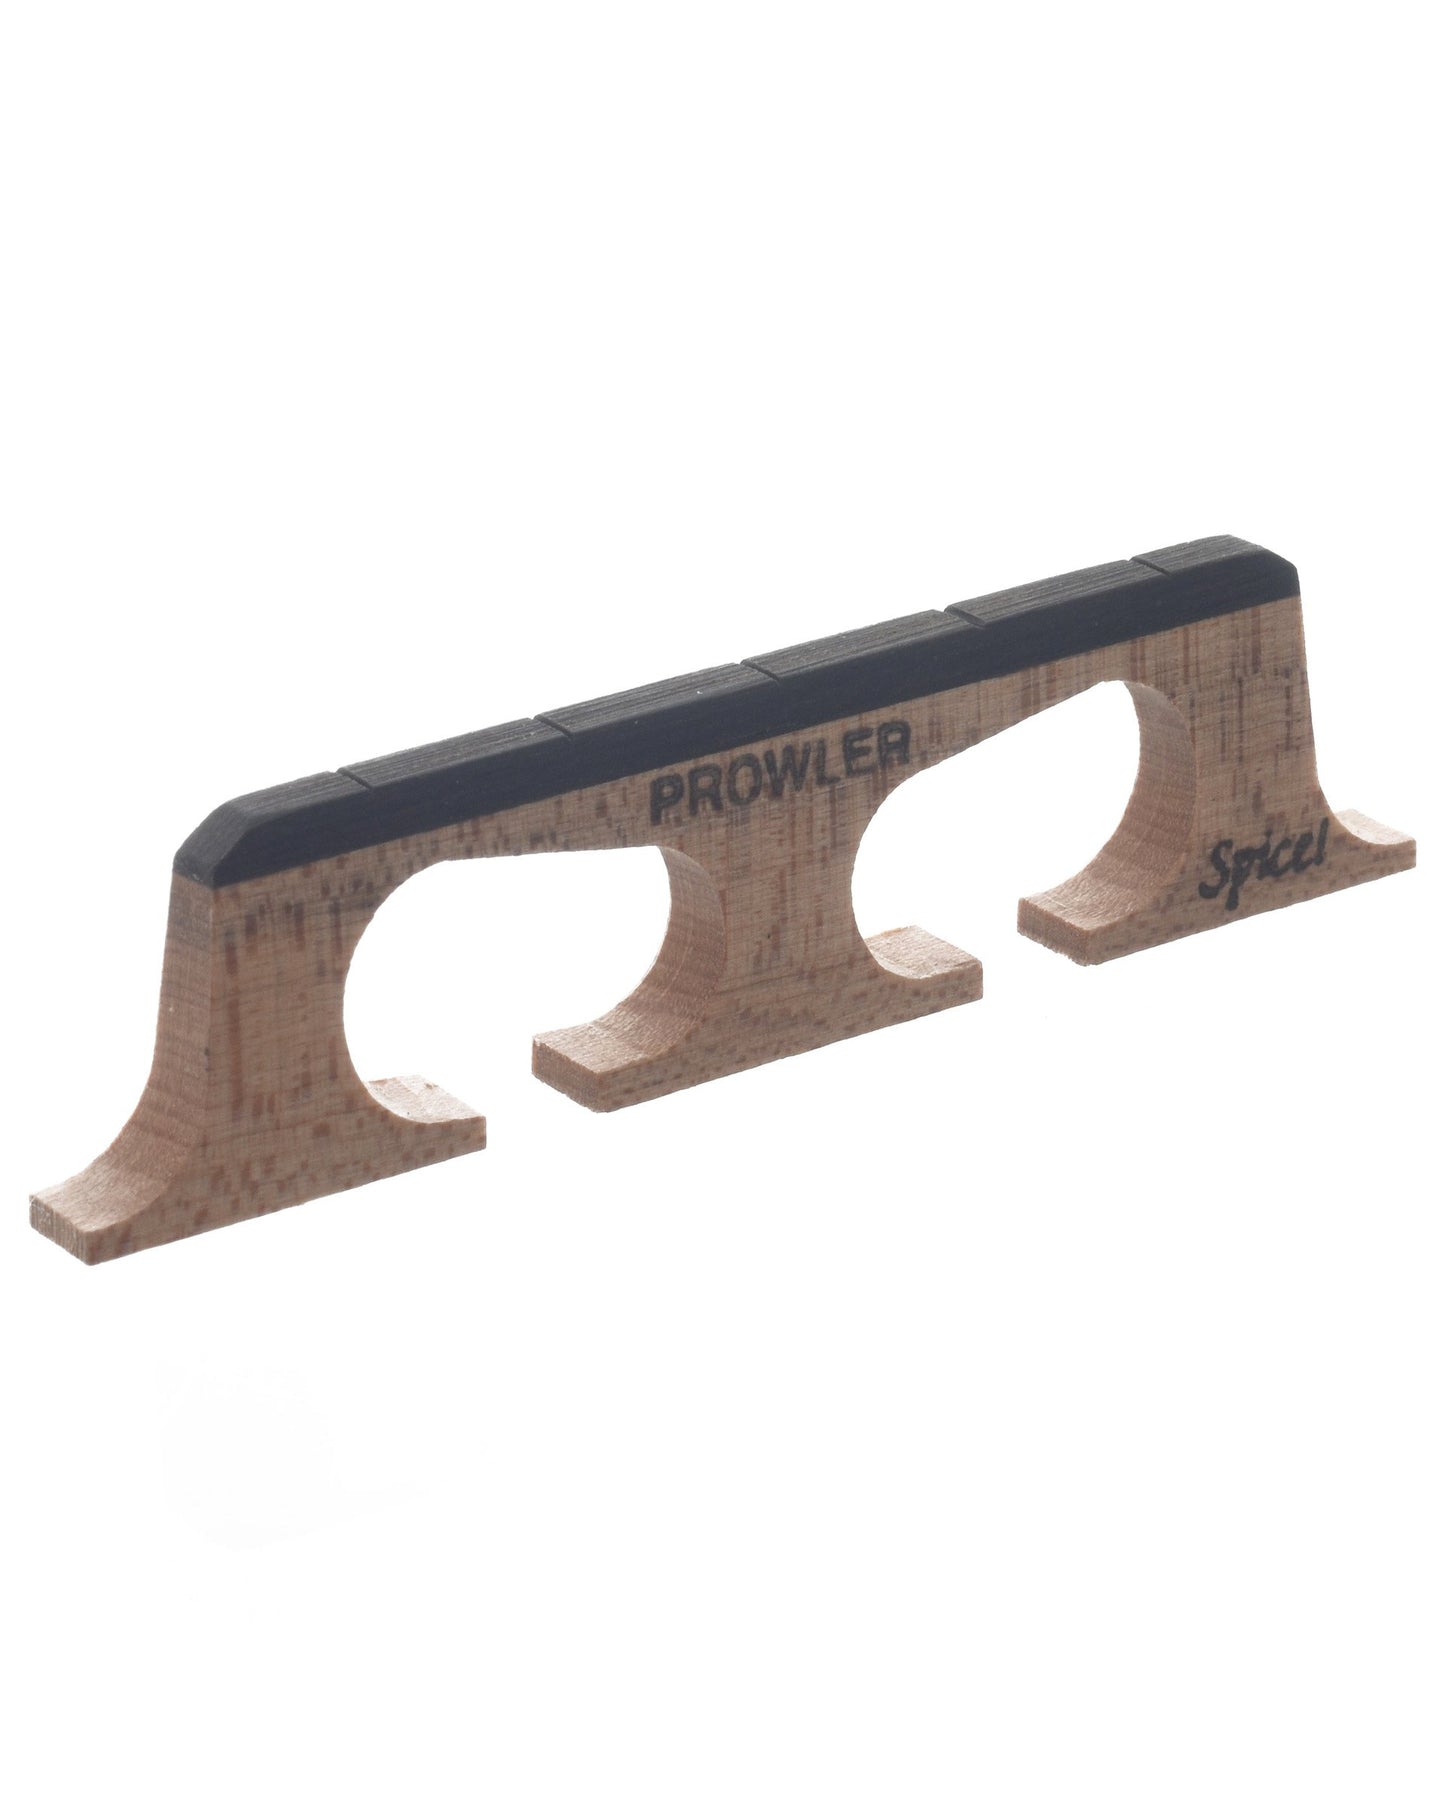 Image 1 of Kat Eyz Prowler Spice Banjo Bridge, 11/16" High, Crowe Spacing - SKU# KEPB-11/16-C : Product Type Accessories & Parts : Elderly Instruments